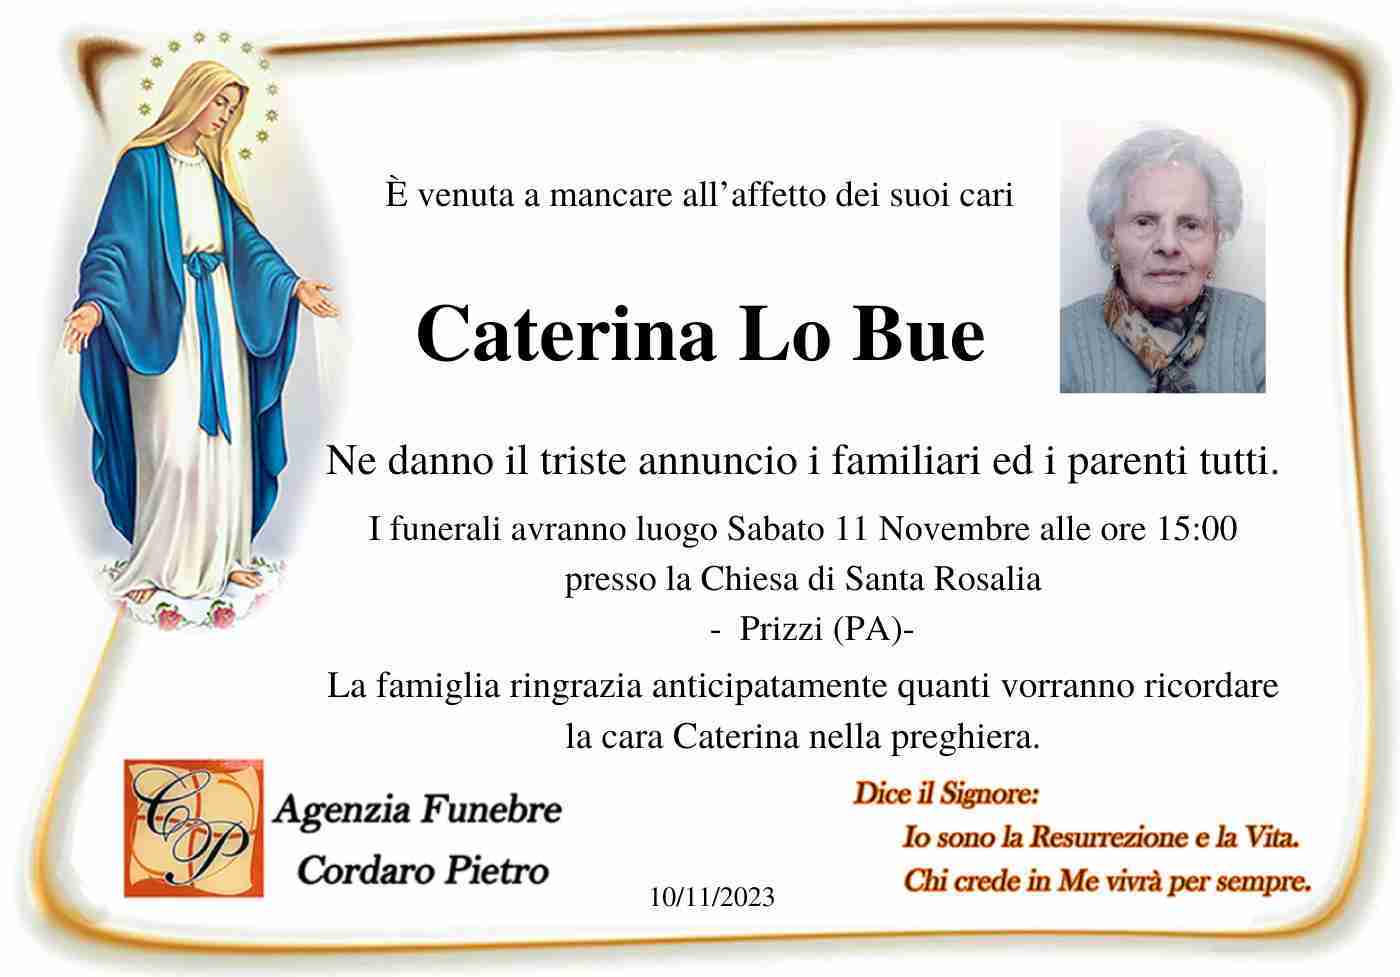 Caterina Lo Bue